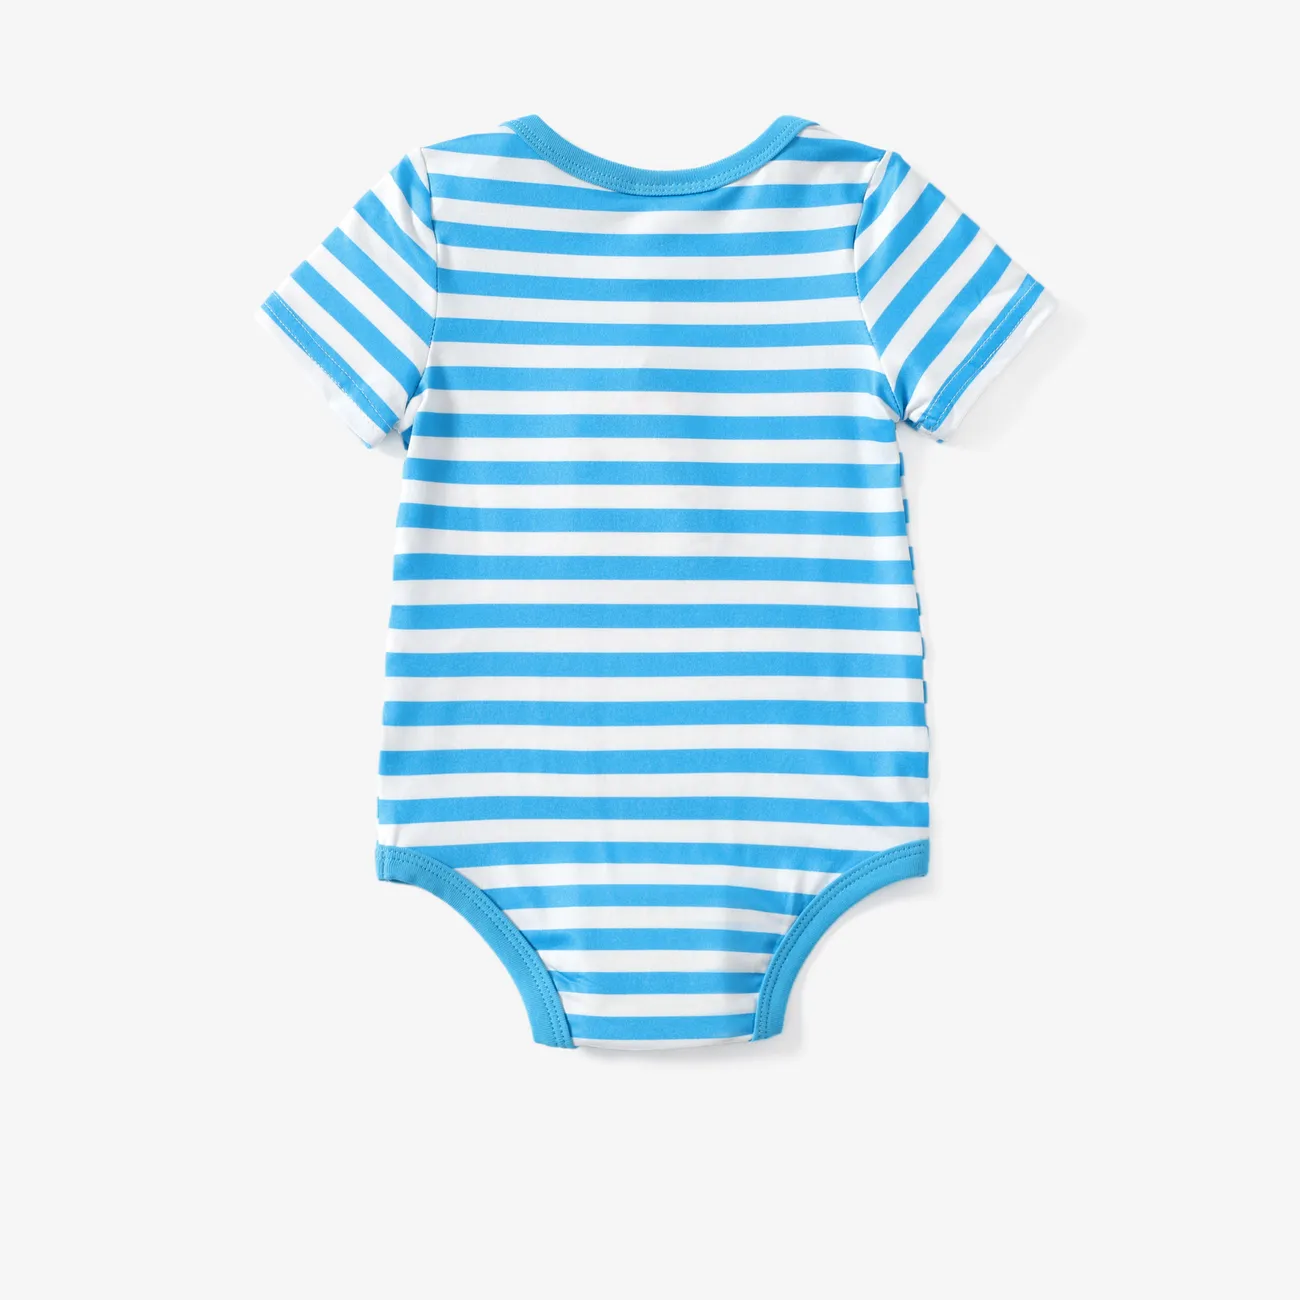 The Smurfs Baby Boys 1pc Cotton Character Stripe Print Short-sleeve Romper Blue big image 1